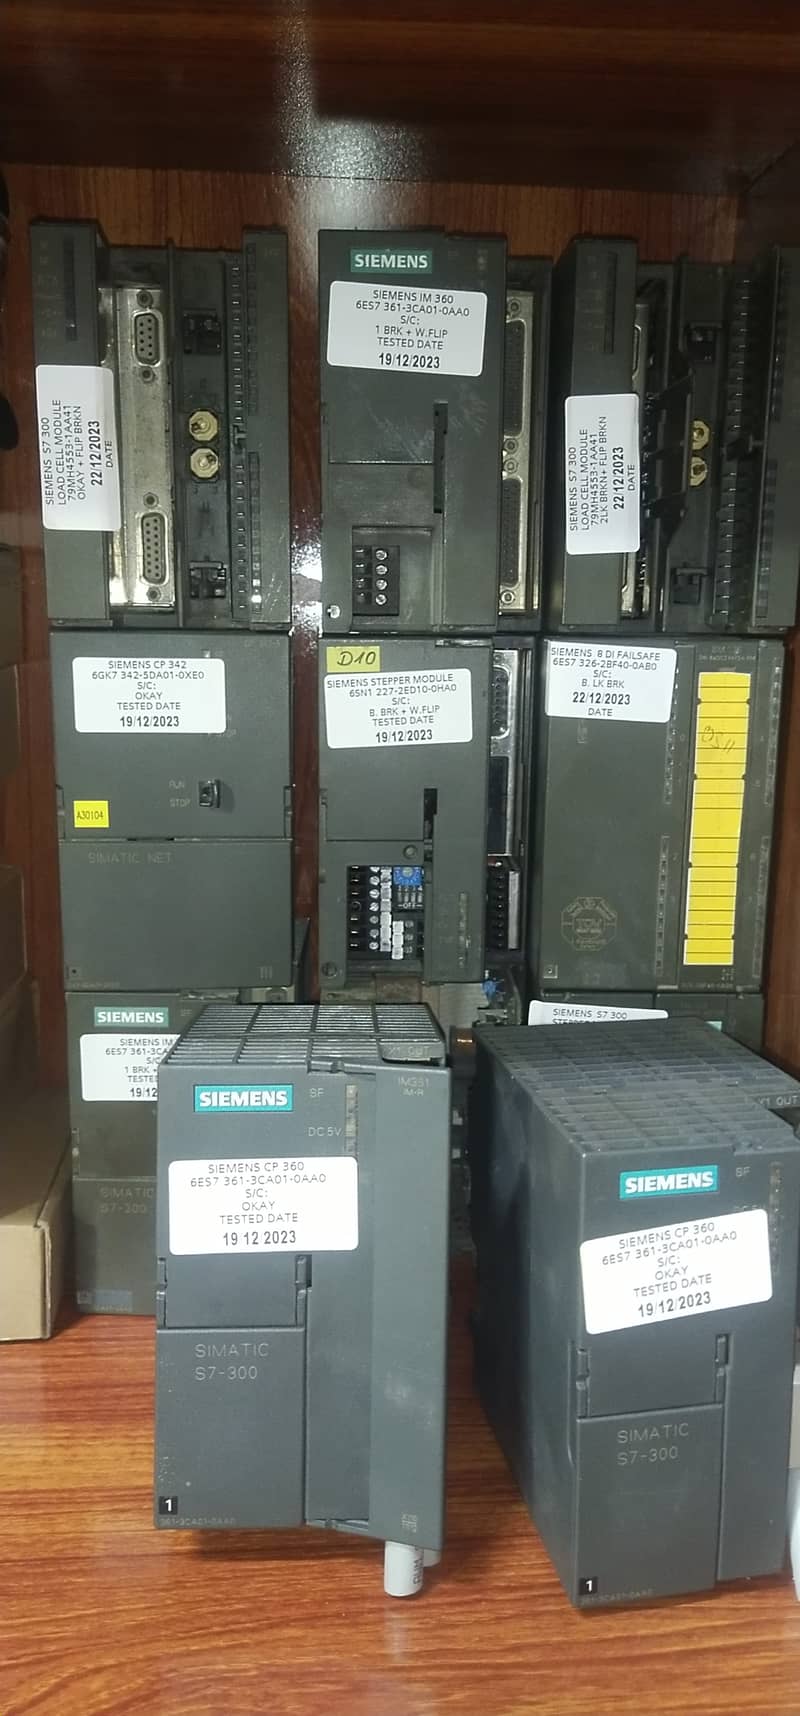 Siemens s7 300 PLC, MMC, CPU, ANALOG & DIGITAL IO, ETHERNET IM MODULE 3